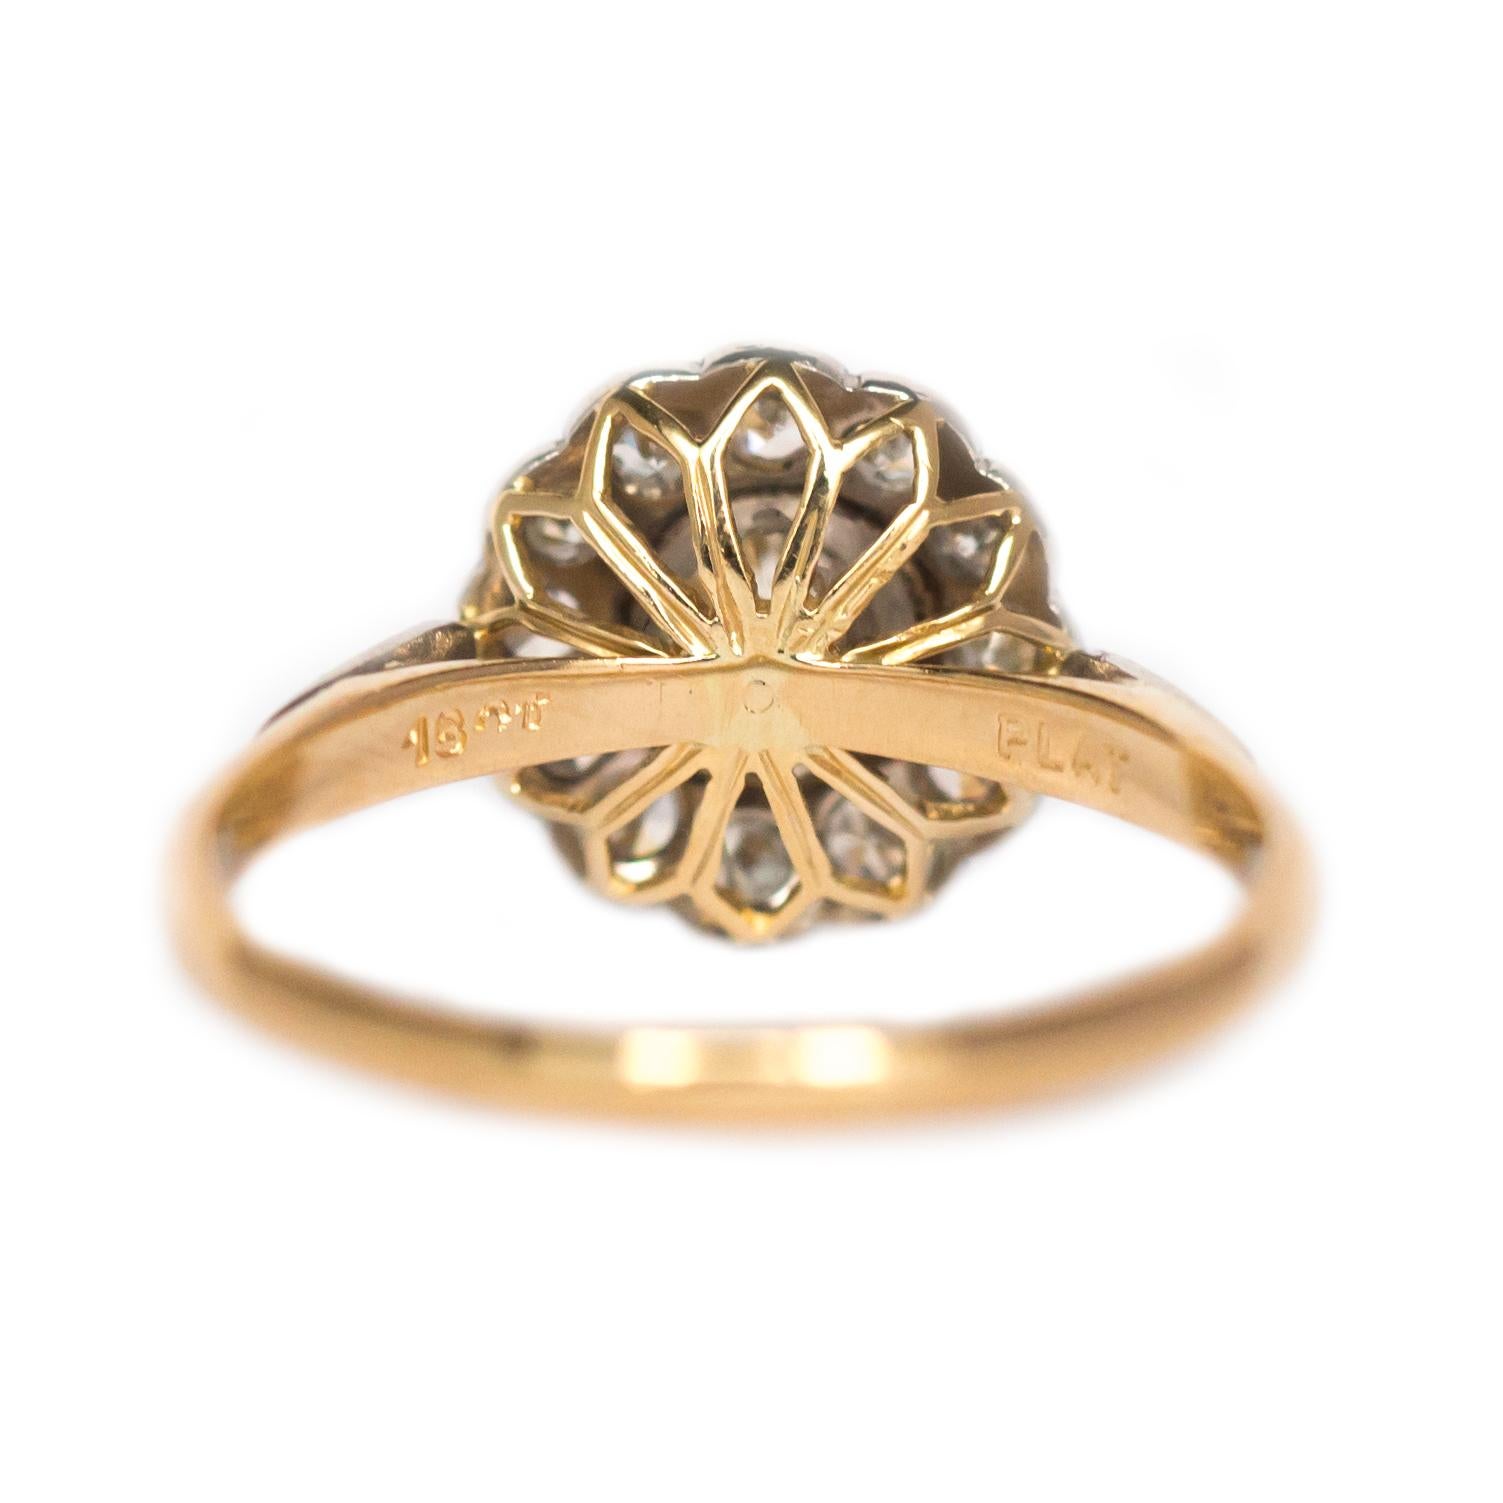 1910 engagement rings